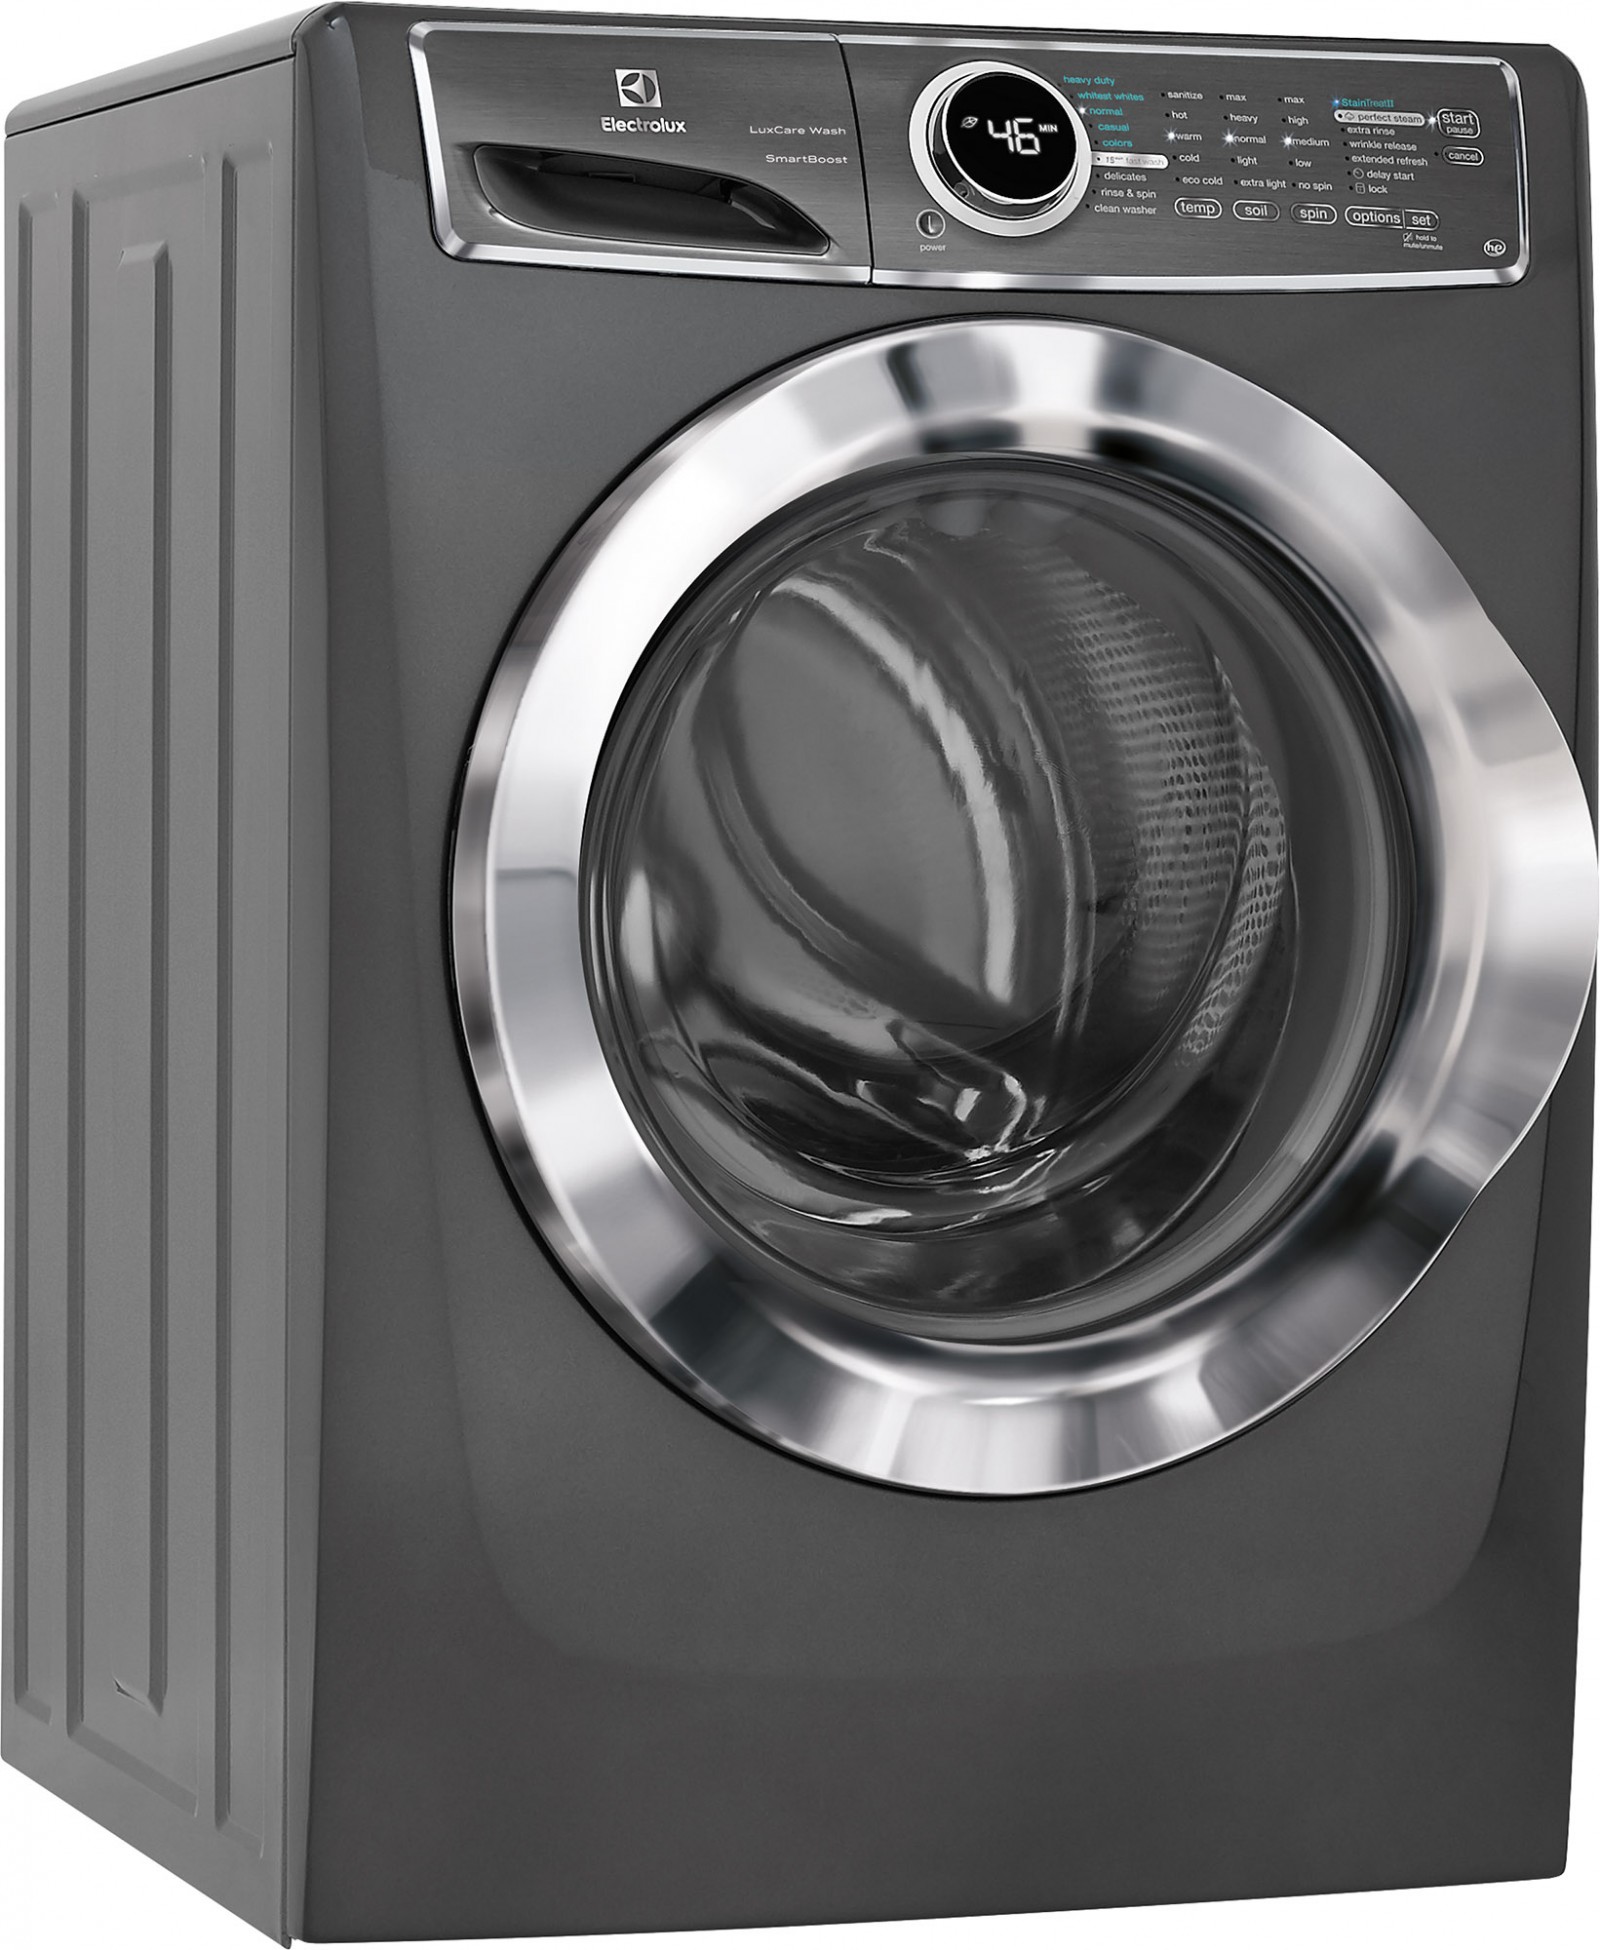 Electrolux Washing Machine Review 